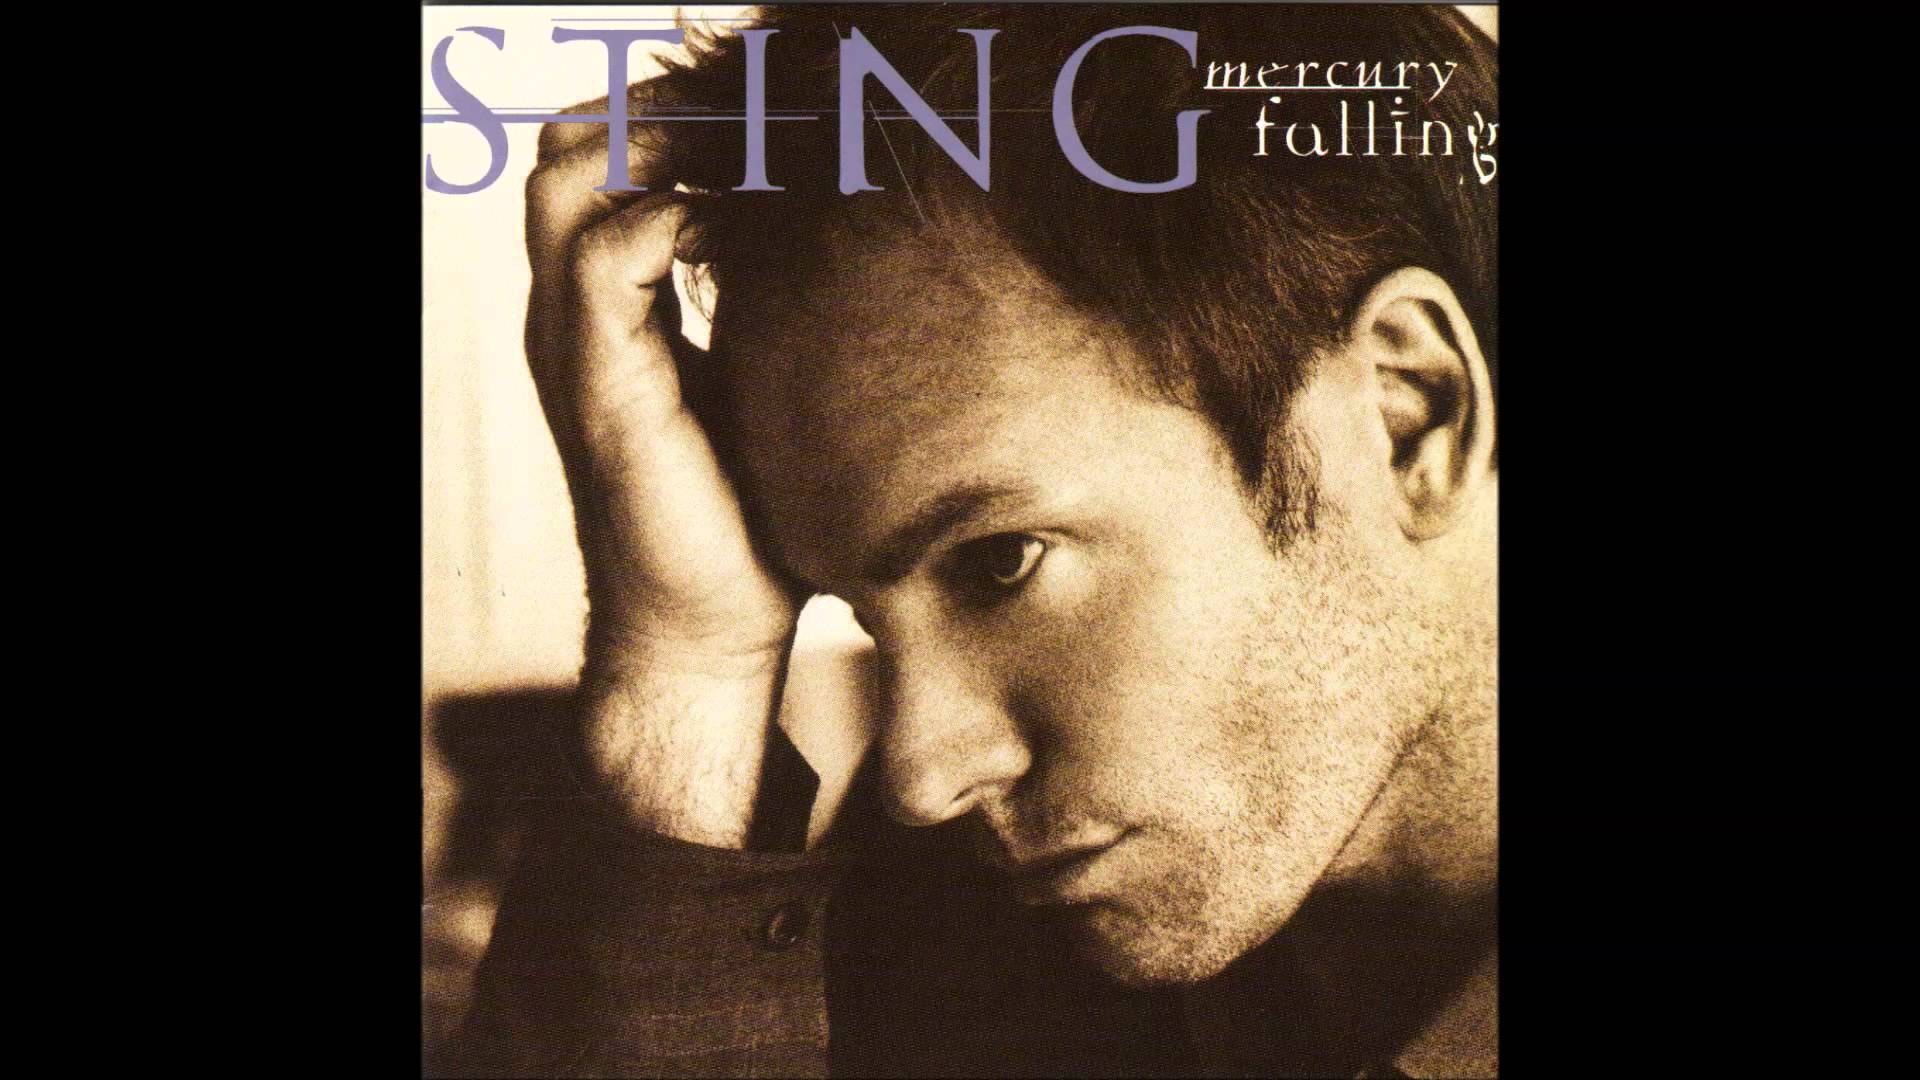 Sans regrets. Рок a&m Sting, Mercury Falling. Стинг Belle Dame. La Belle Dame Sans regrets стинг. Sting Mercury Falling альбом.